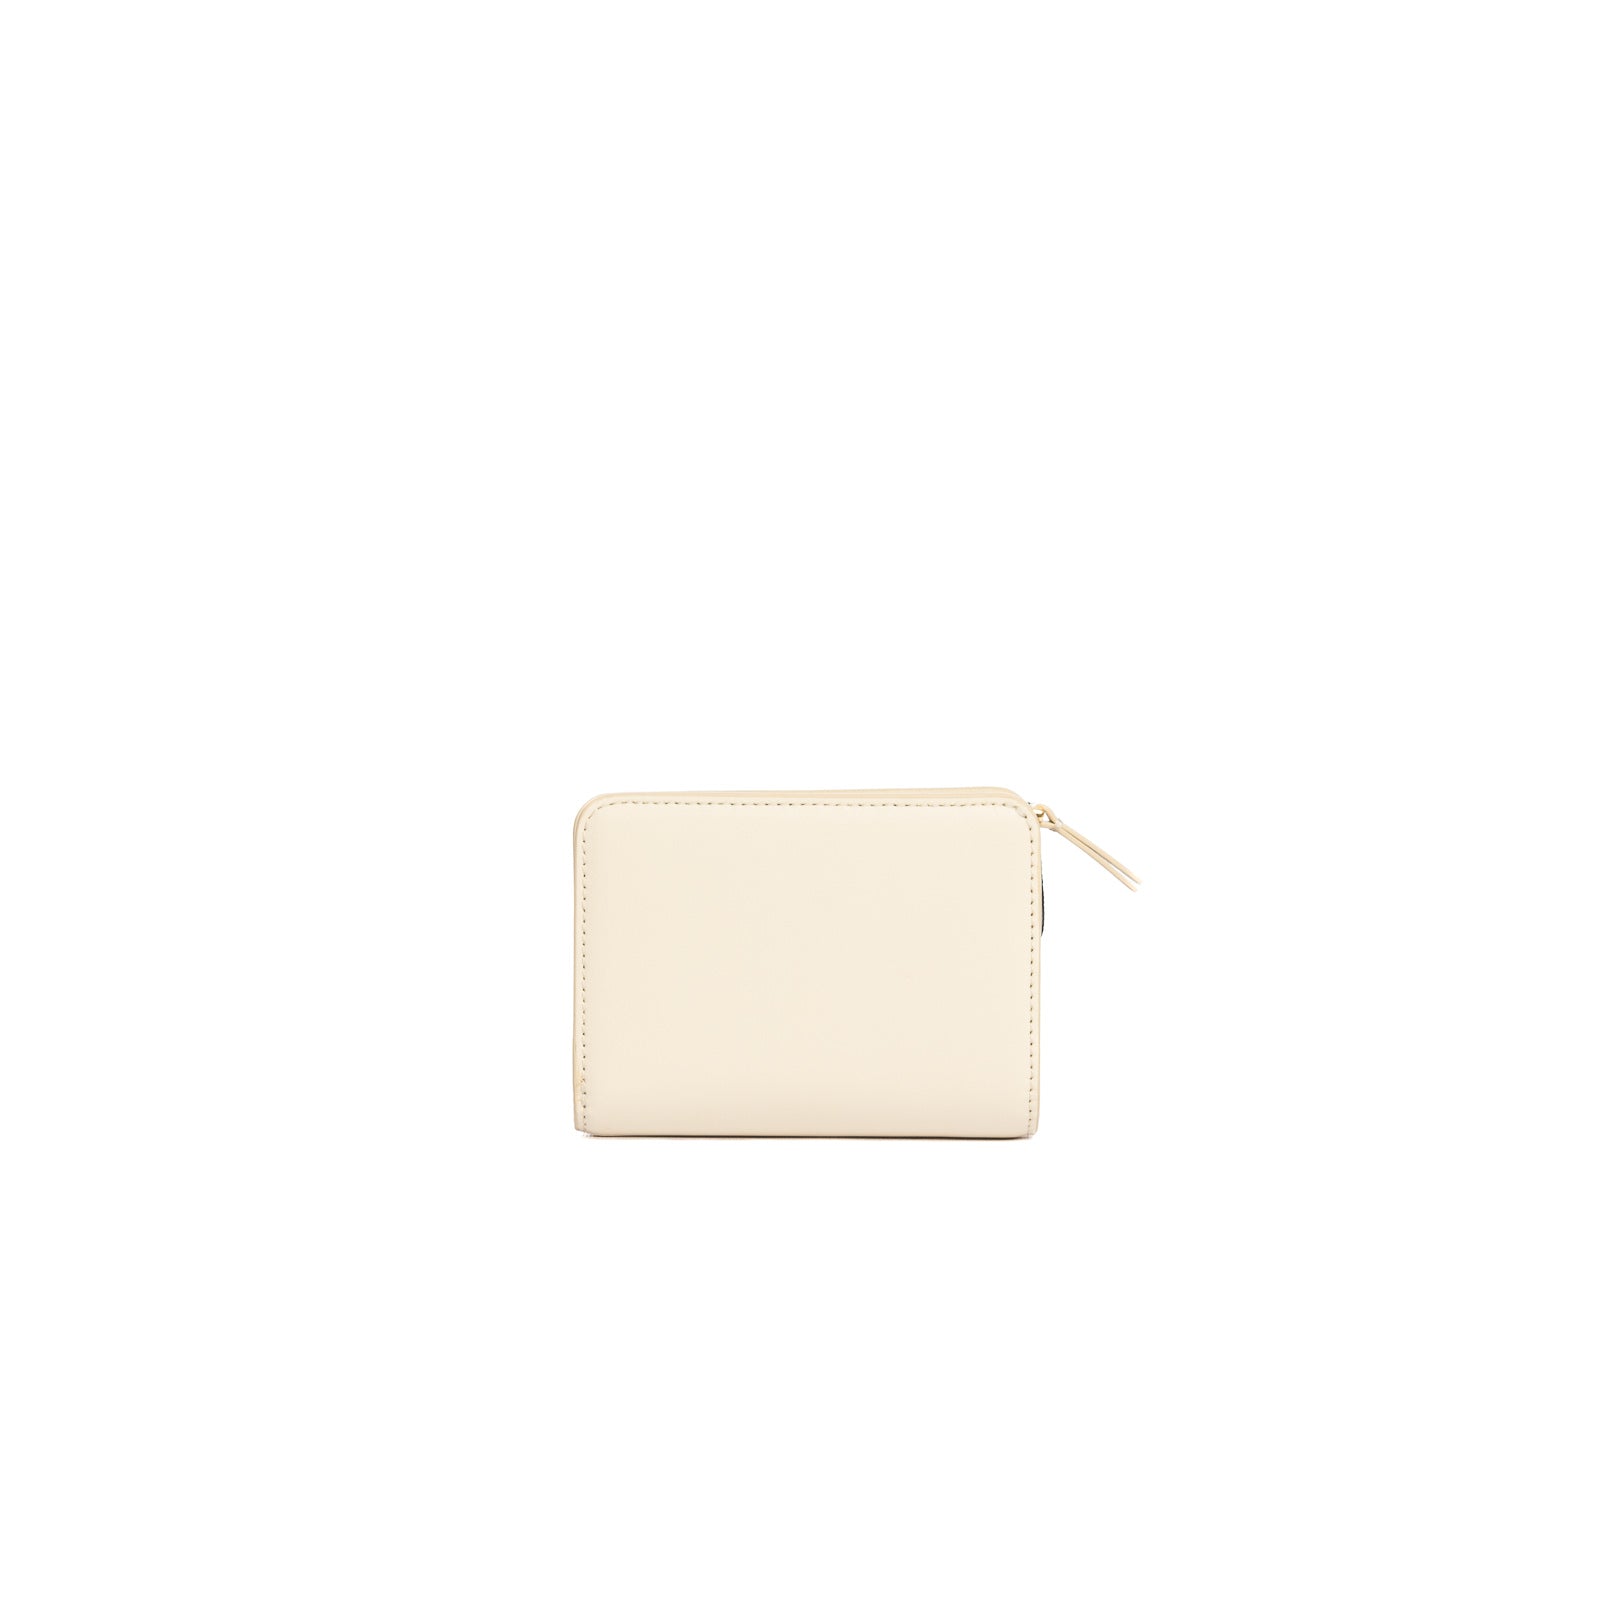 Portafoglio MARC JACOBS The mini compact wallet
Bianco